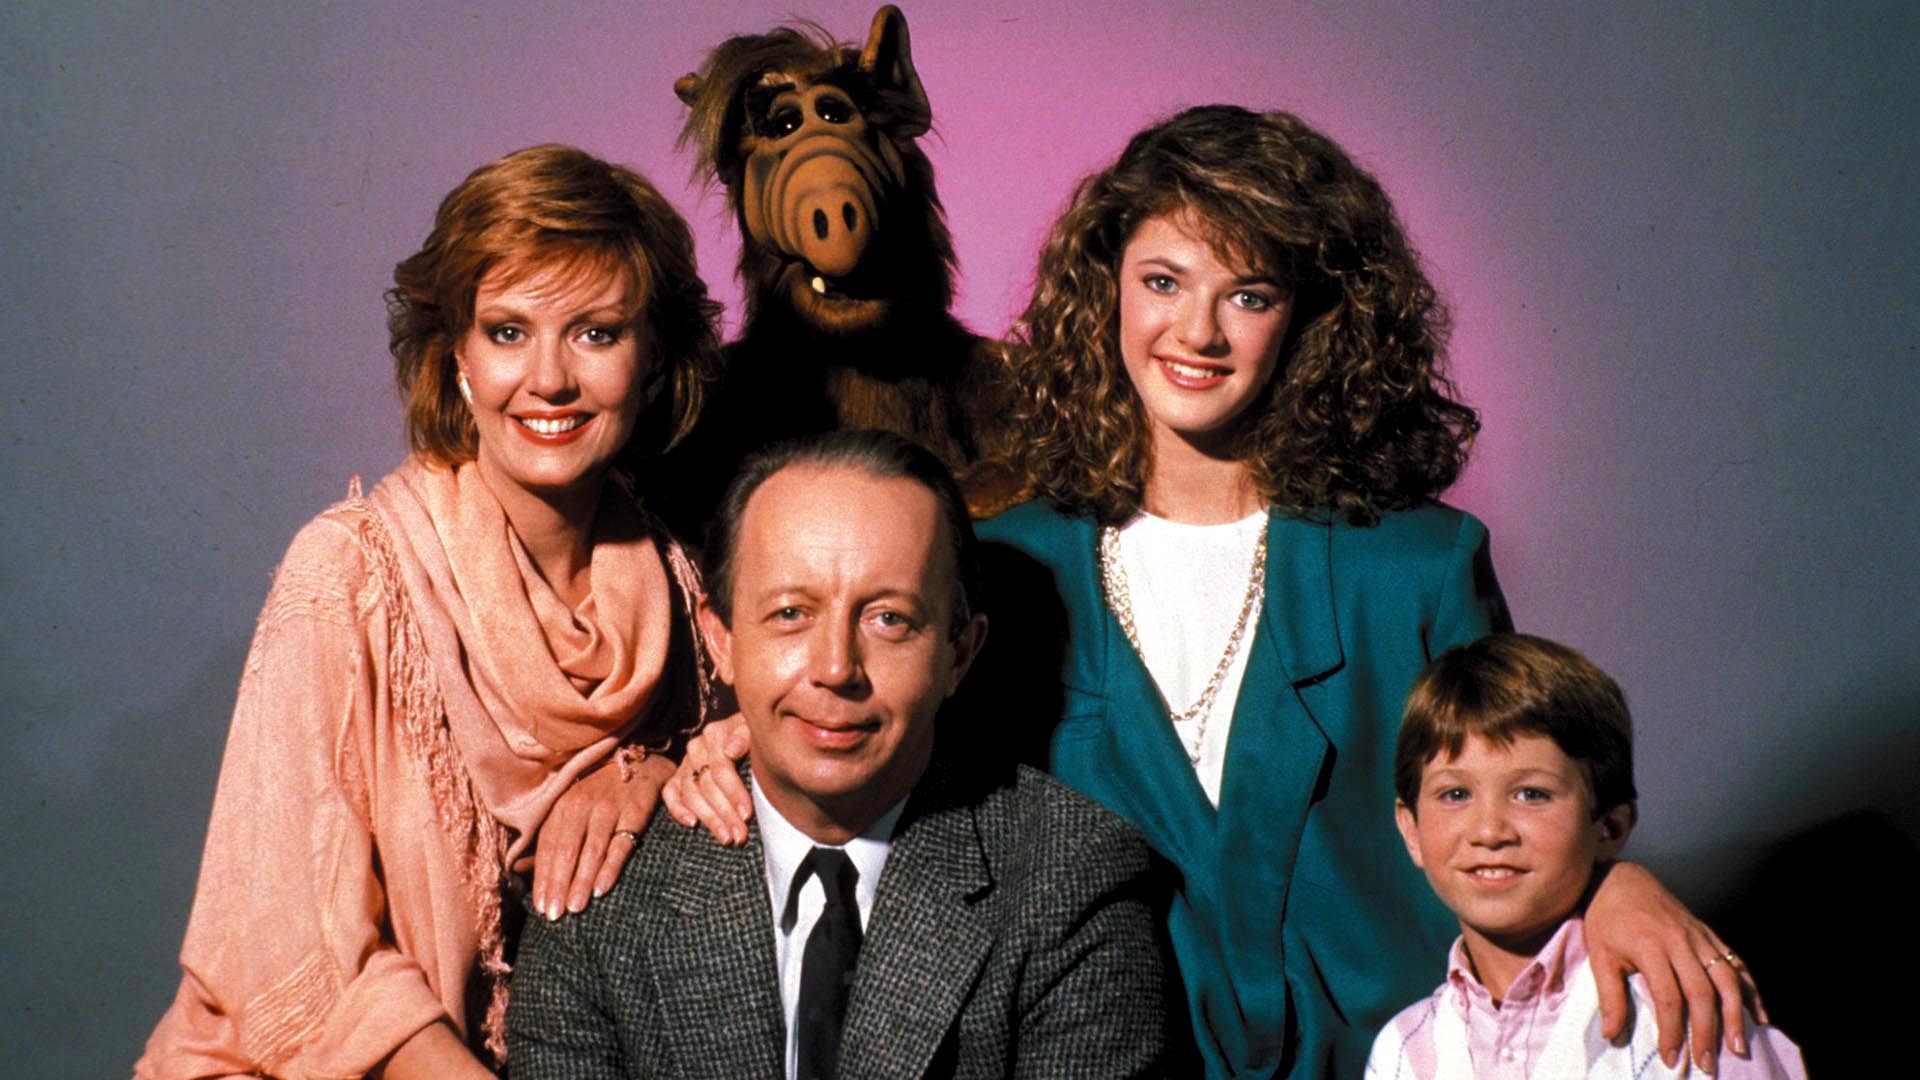 Elenco de la serie "Alf". (NBC)